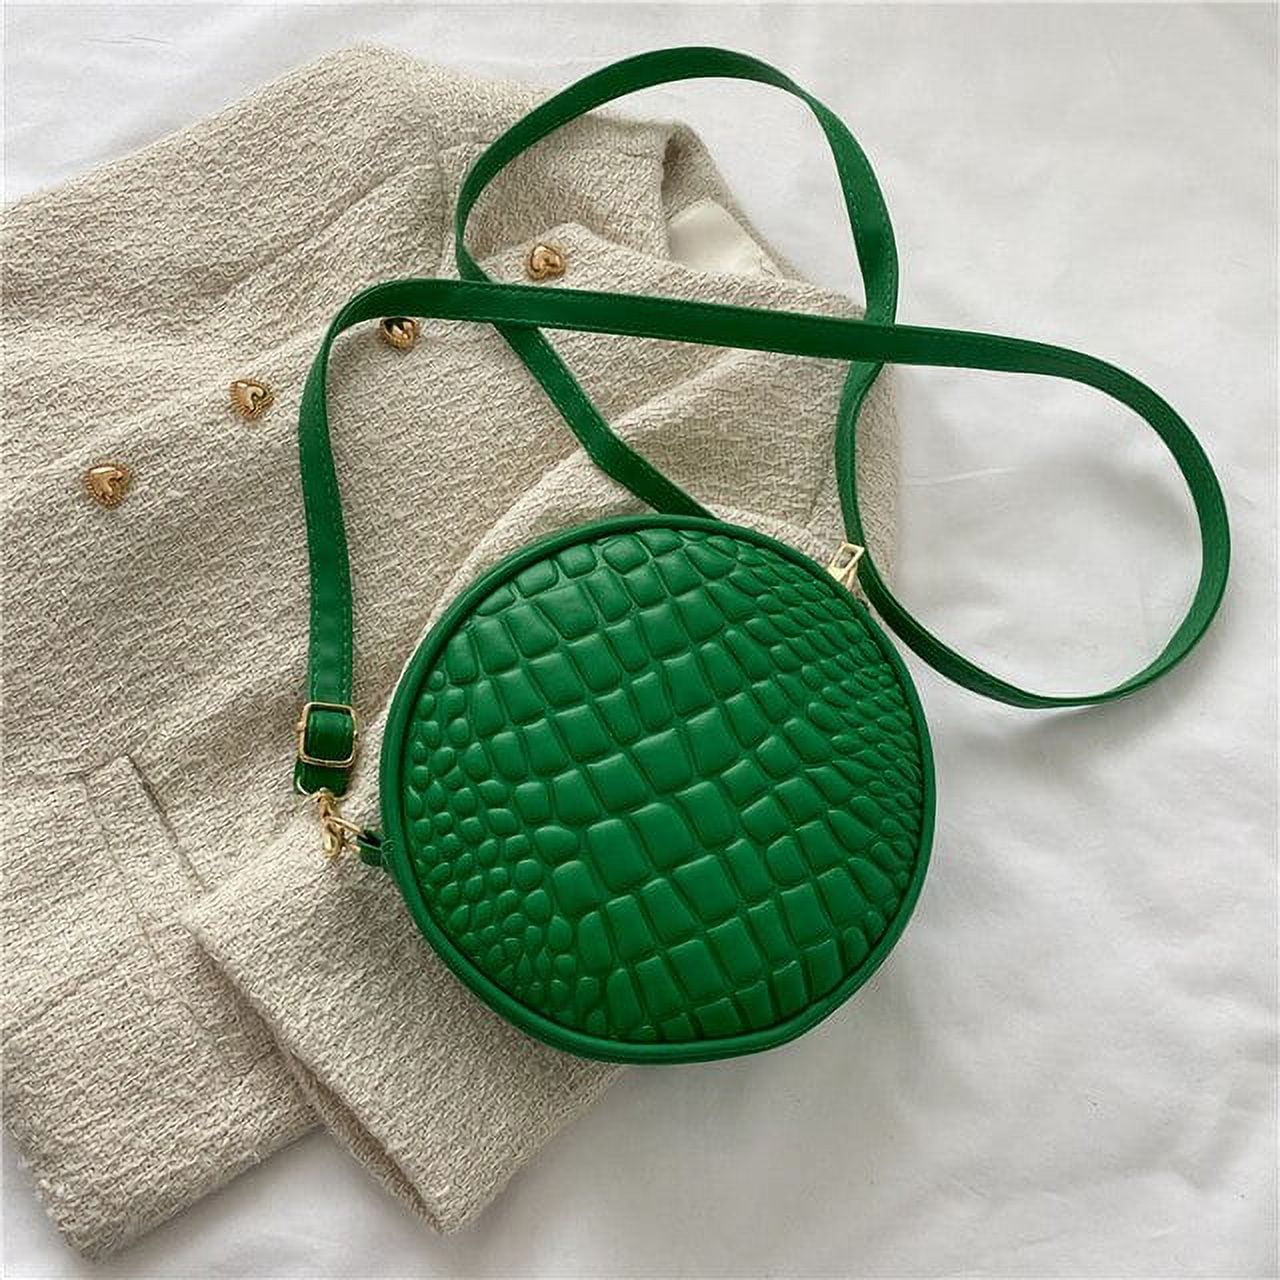 The Circle Handbag | Clutch Bag - Leather Clutch Hand Bag - Women Messenger  Bag with Circular Handle | Shoulder Bag | Crossbody Bag